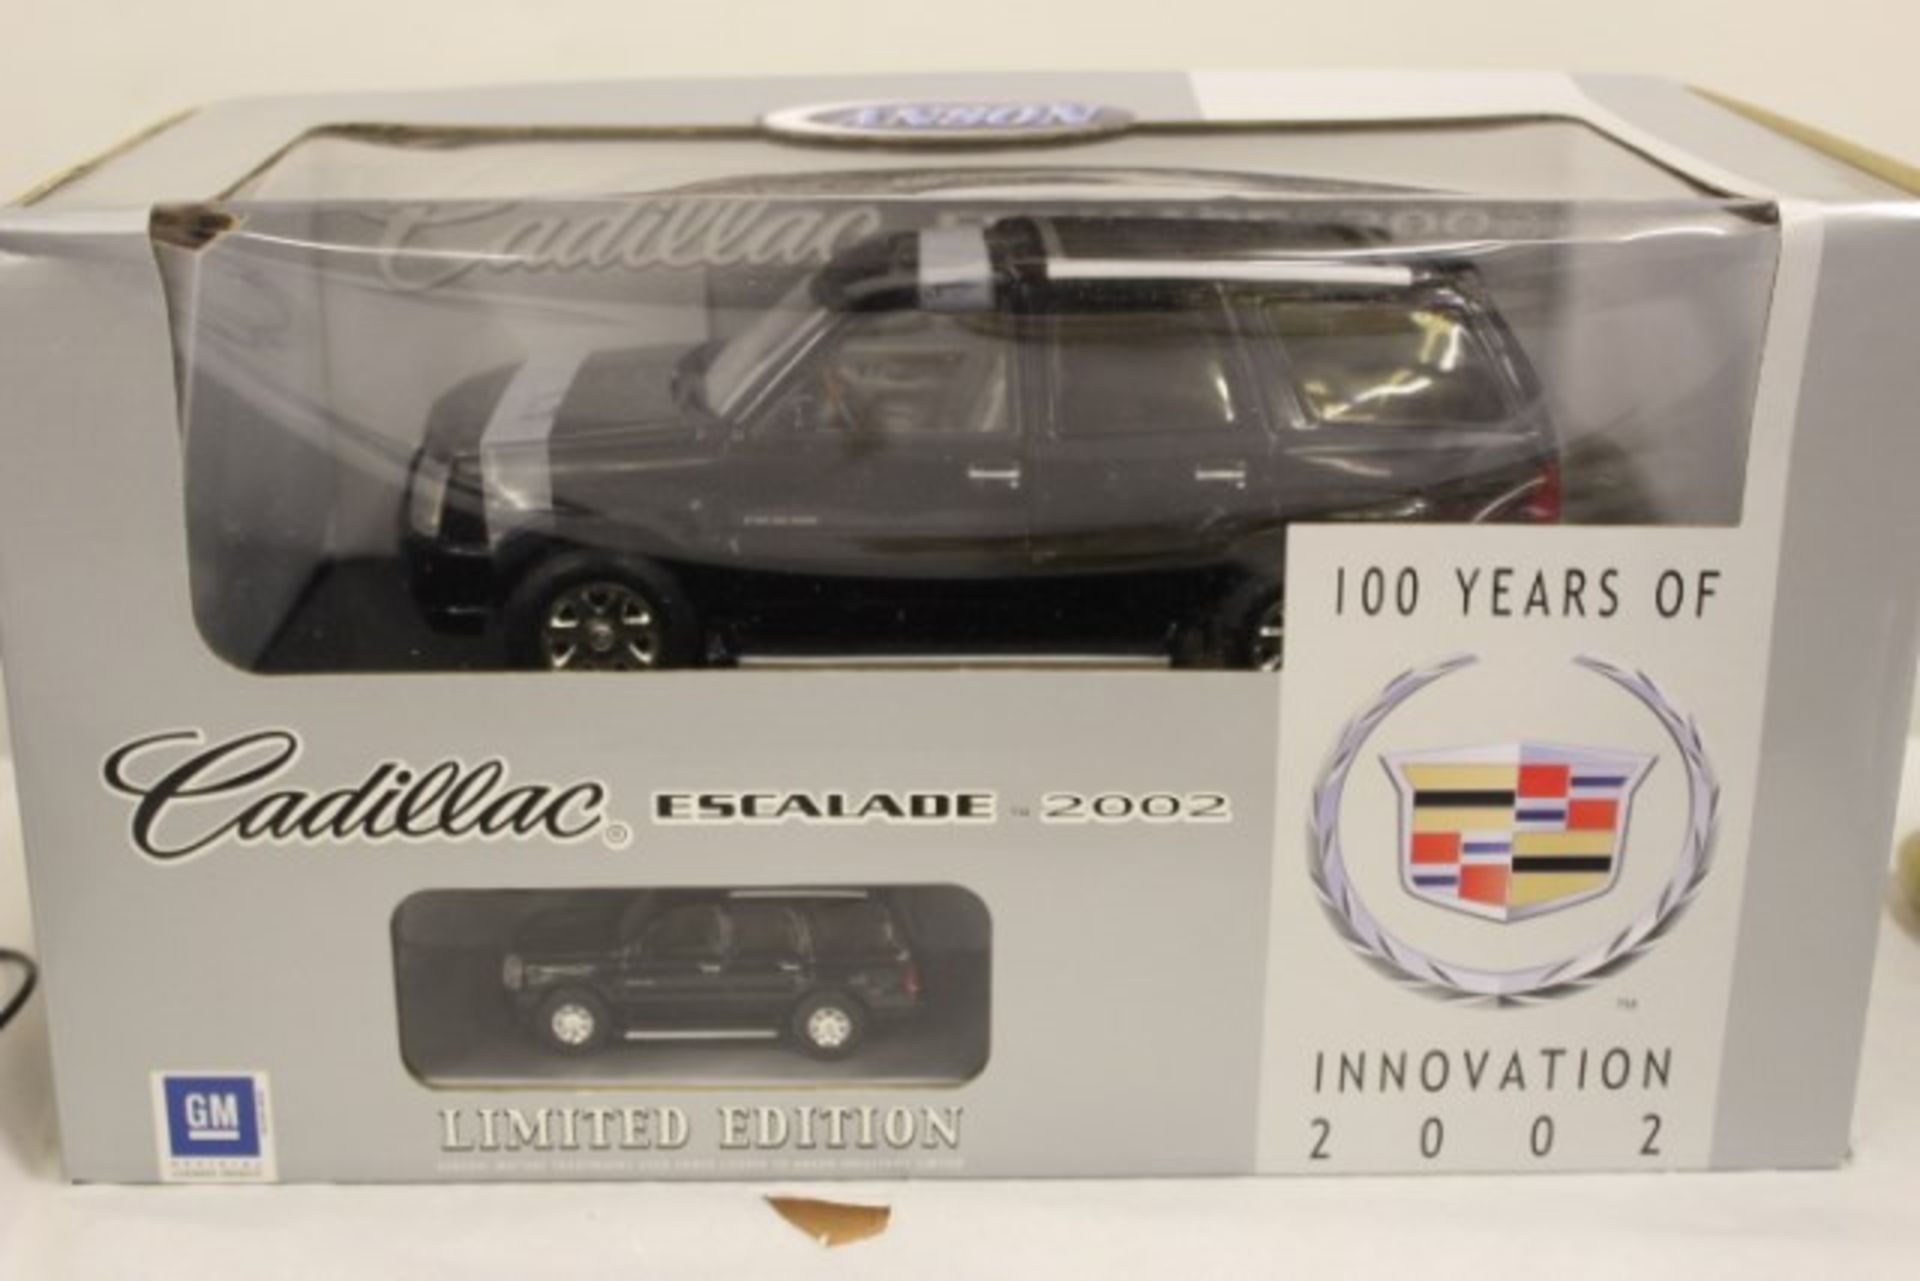 V Grade B Anson Limited Edition Cadillac Escalade 2002 Model Car